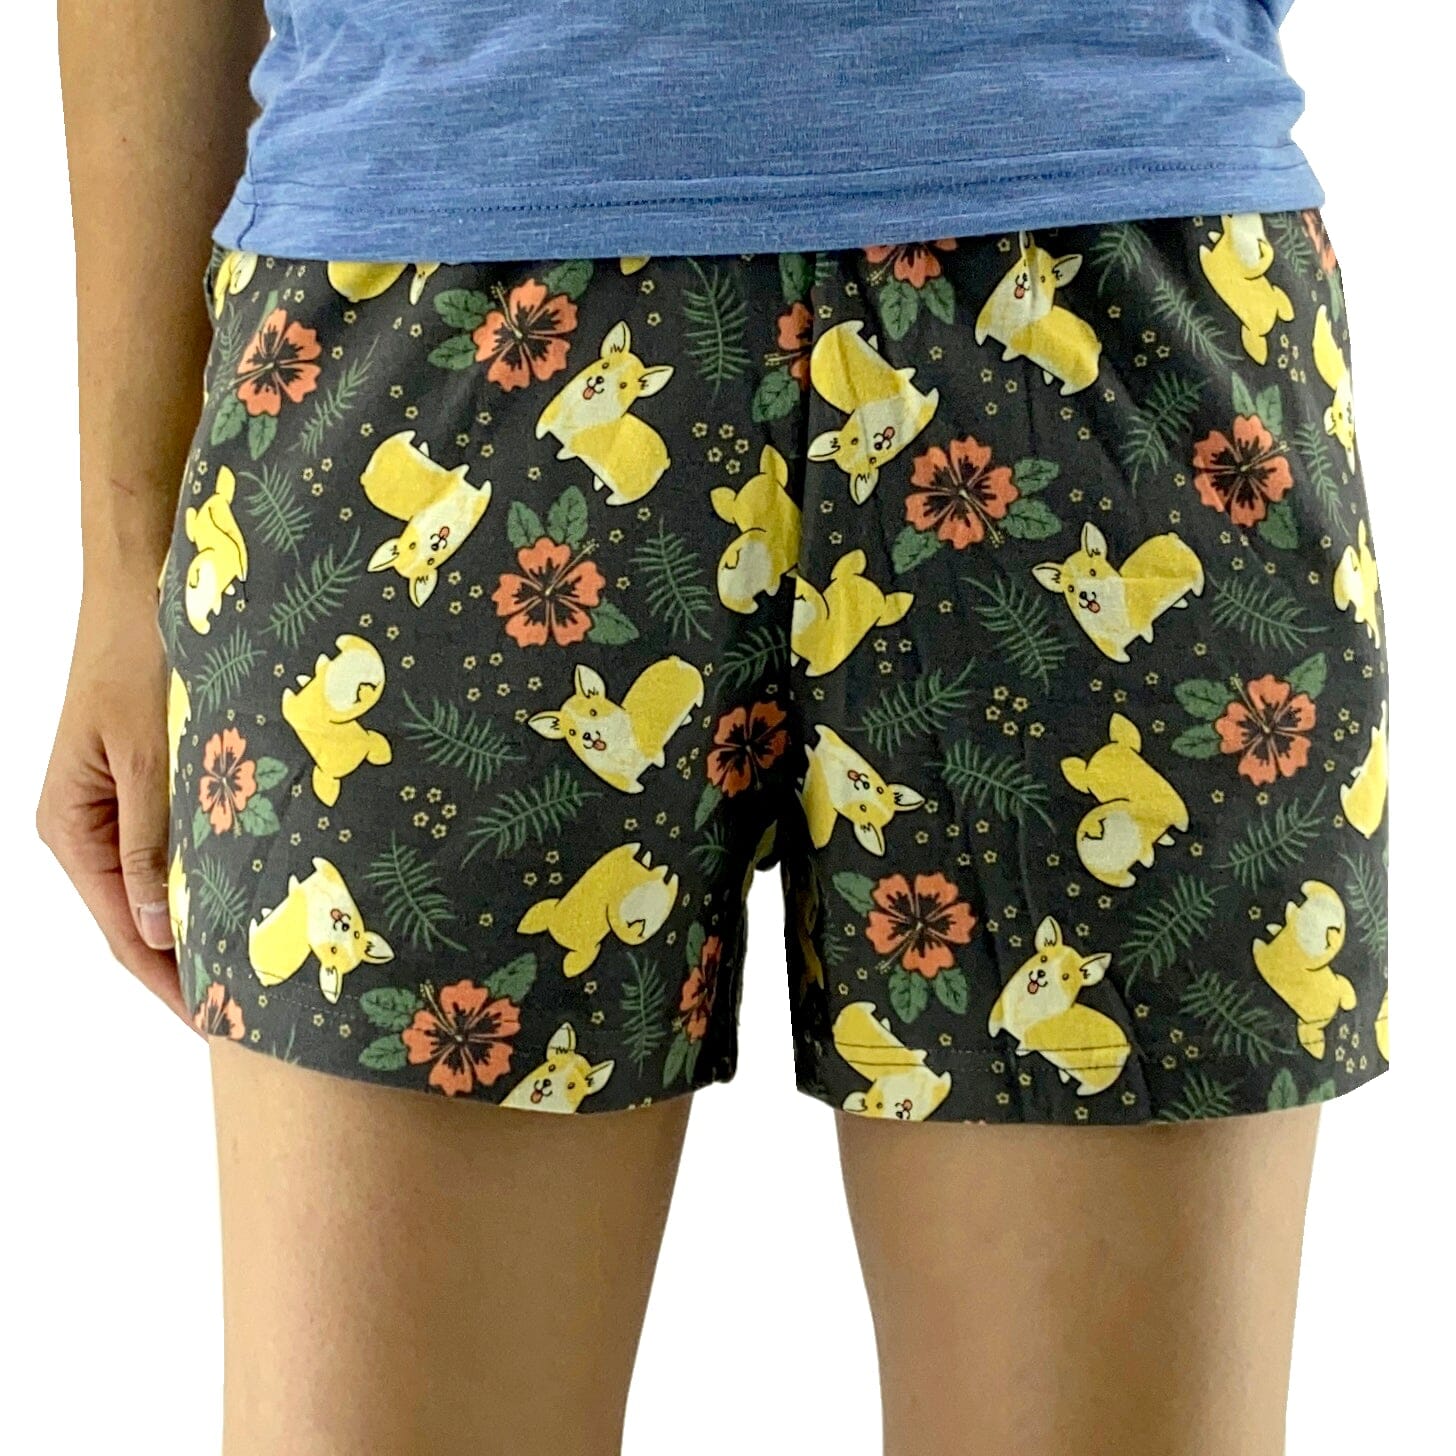 Women's Corgi Butt All-Over Novelty Print Cotton Knit PJ Pajama Shorts